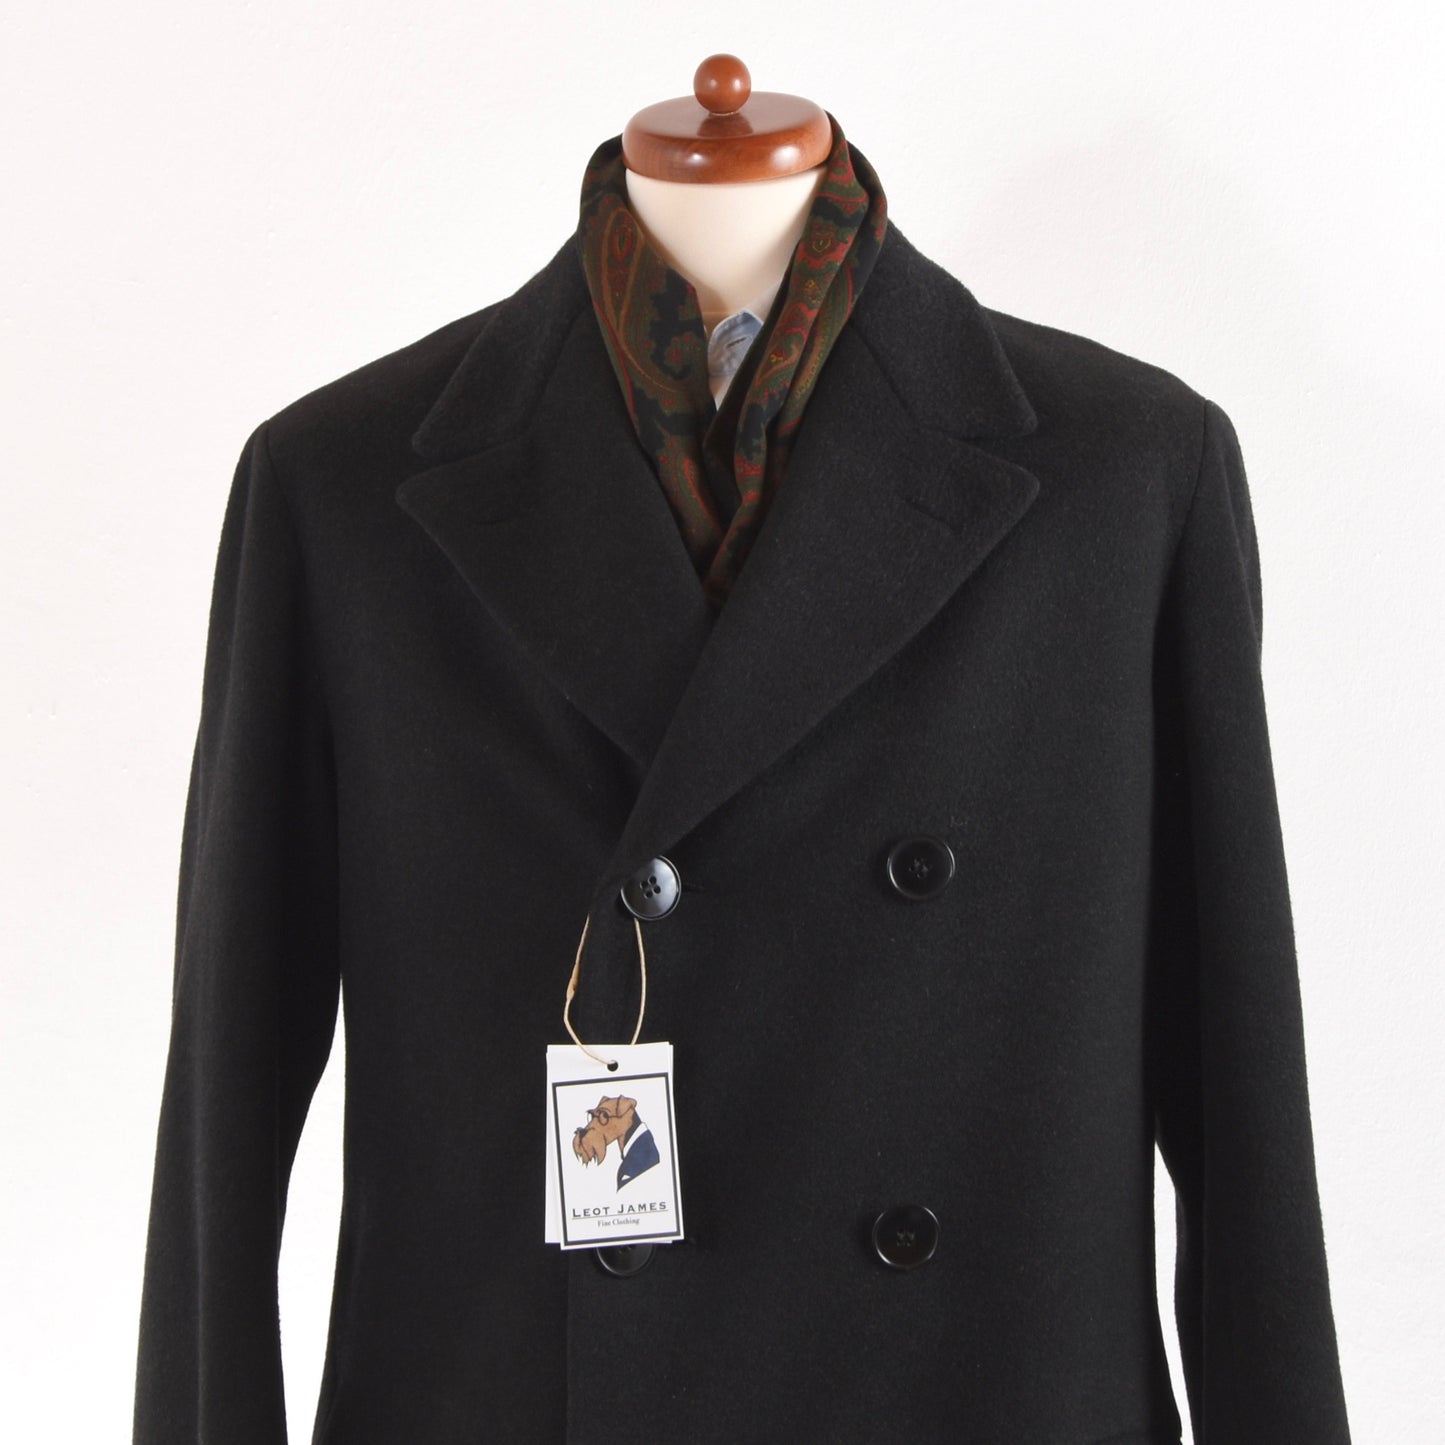 Bespoke 1930s-1940s Bespoke Double-Breasted Coat - Charcoal